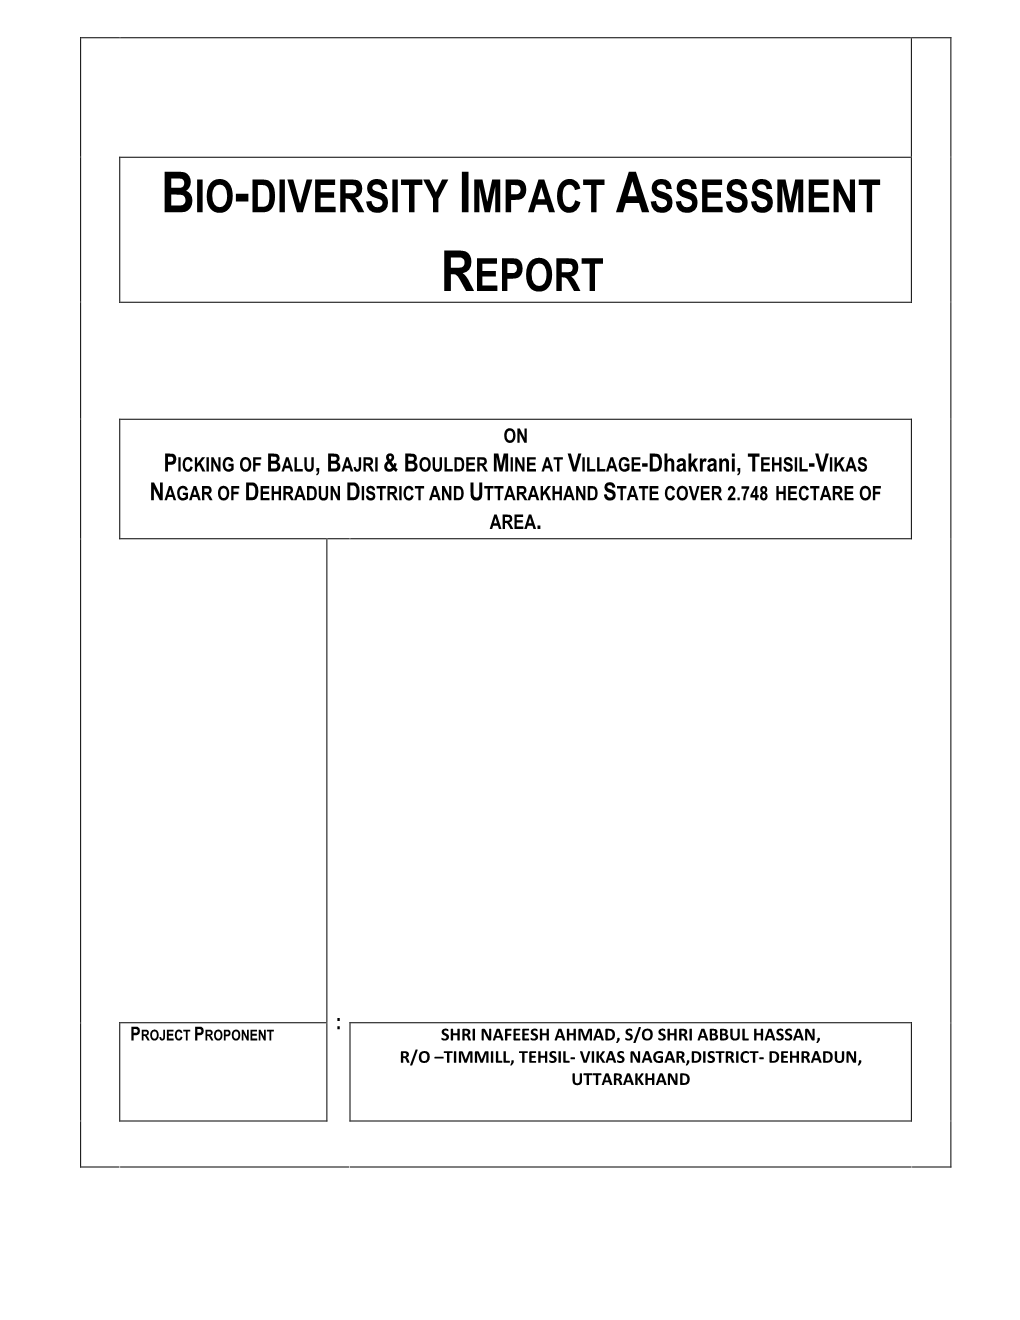 Bio-Diversity Impact Assessment Report